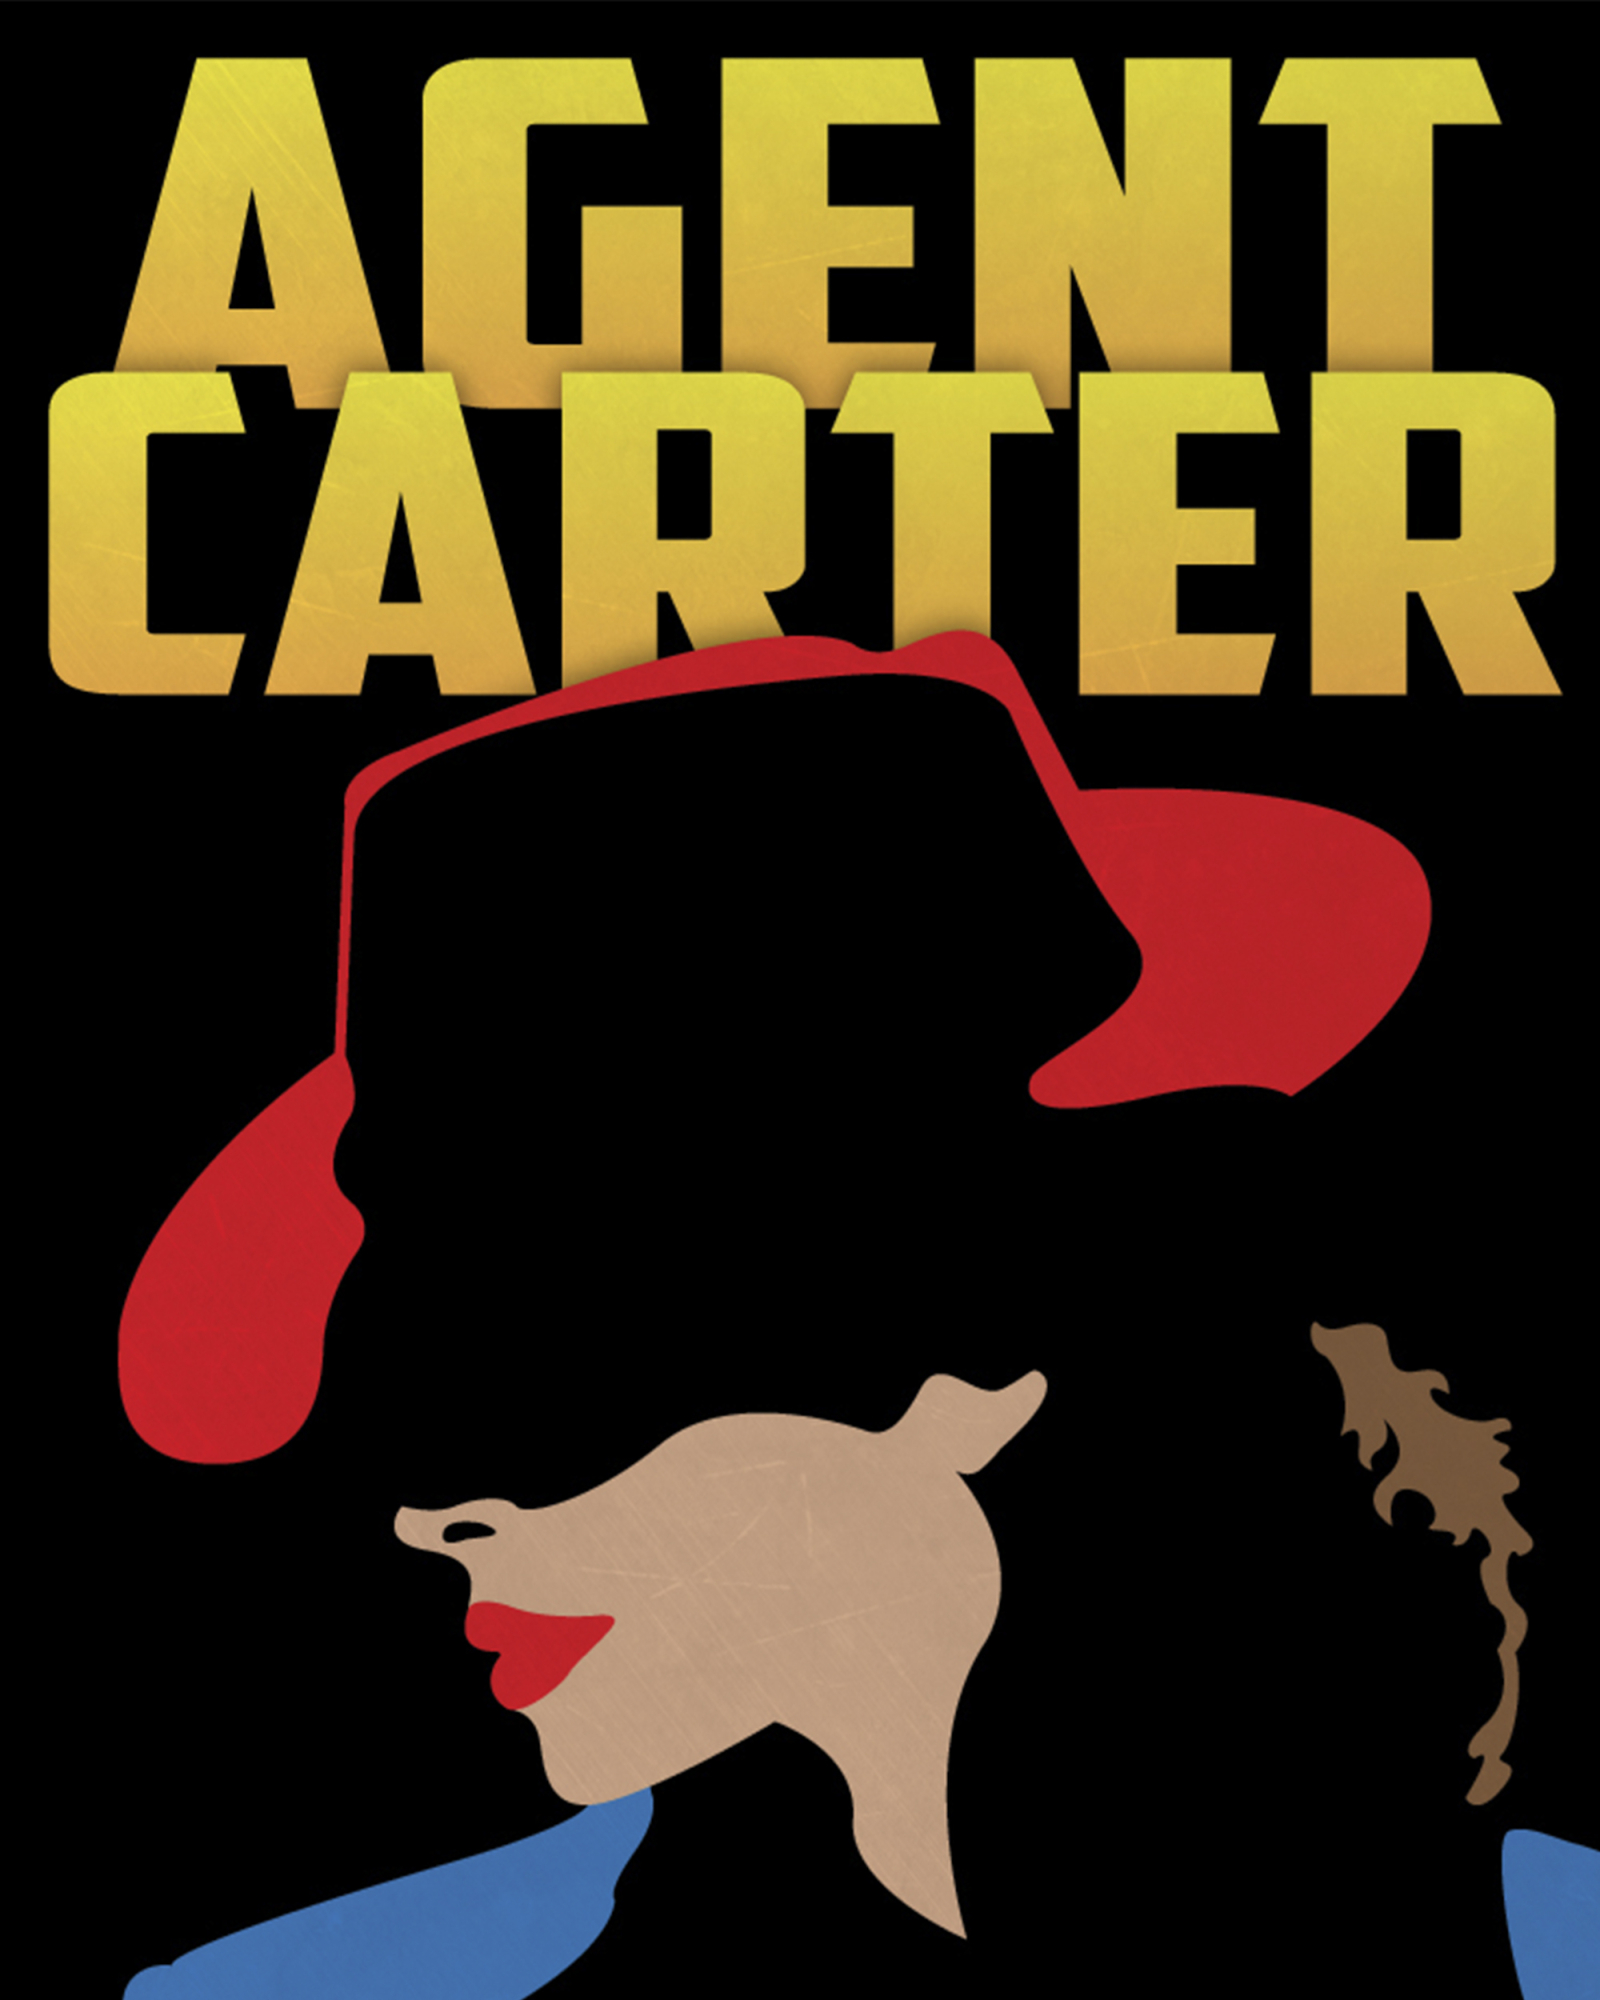 Marvel S Agent Carter Inspired Poster Minimalist Fan Art Posterspy